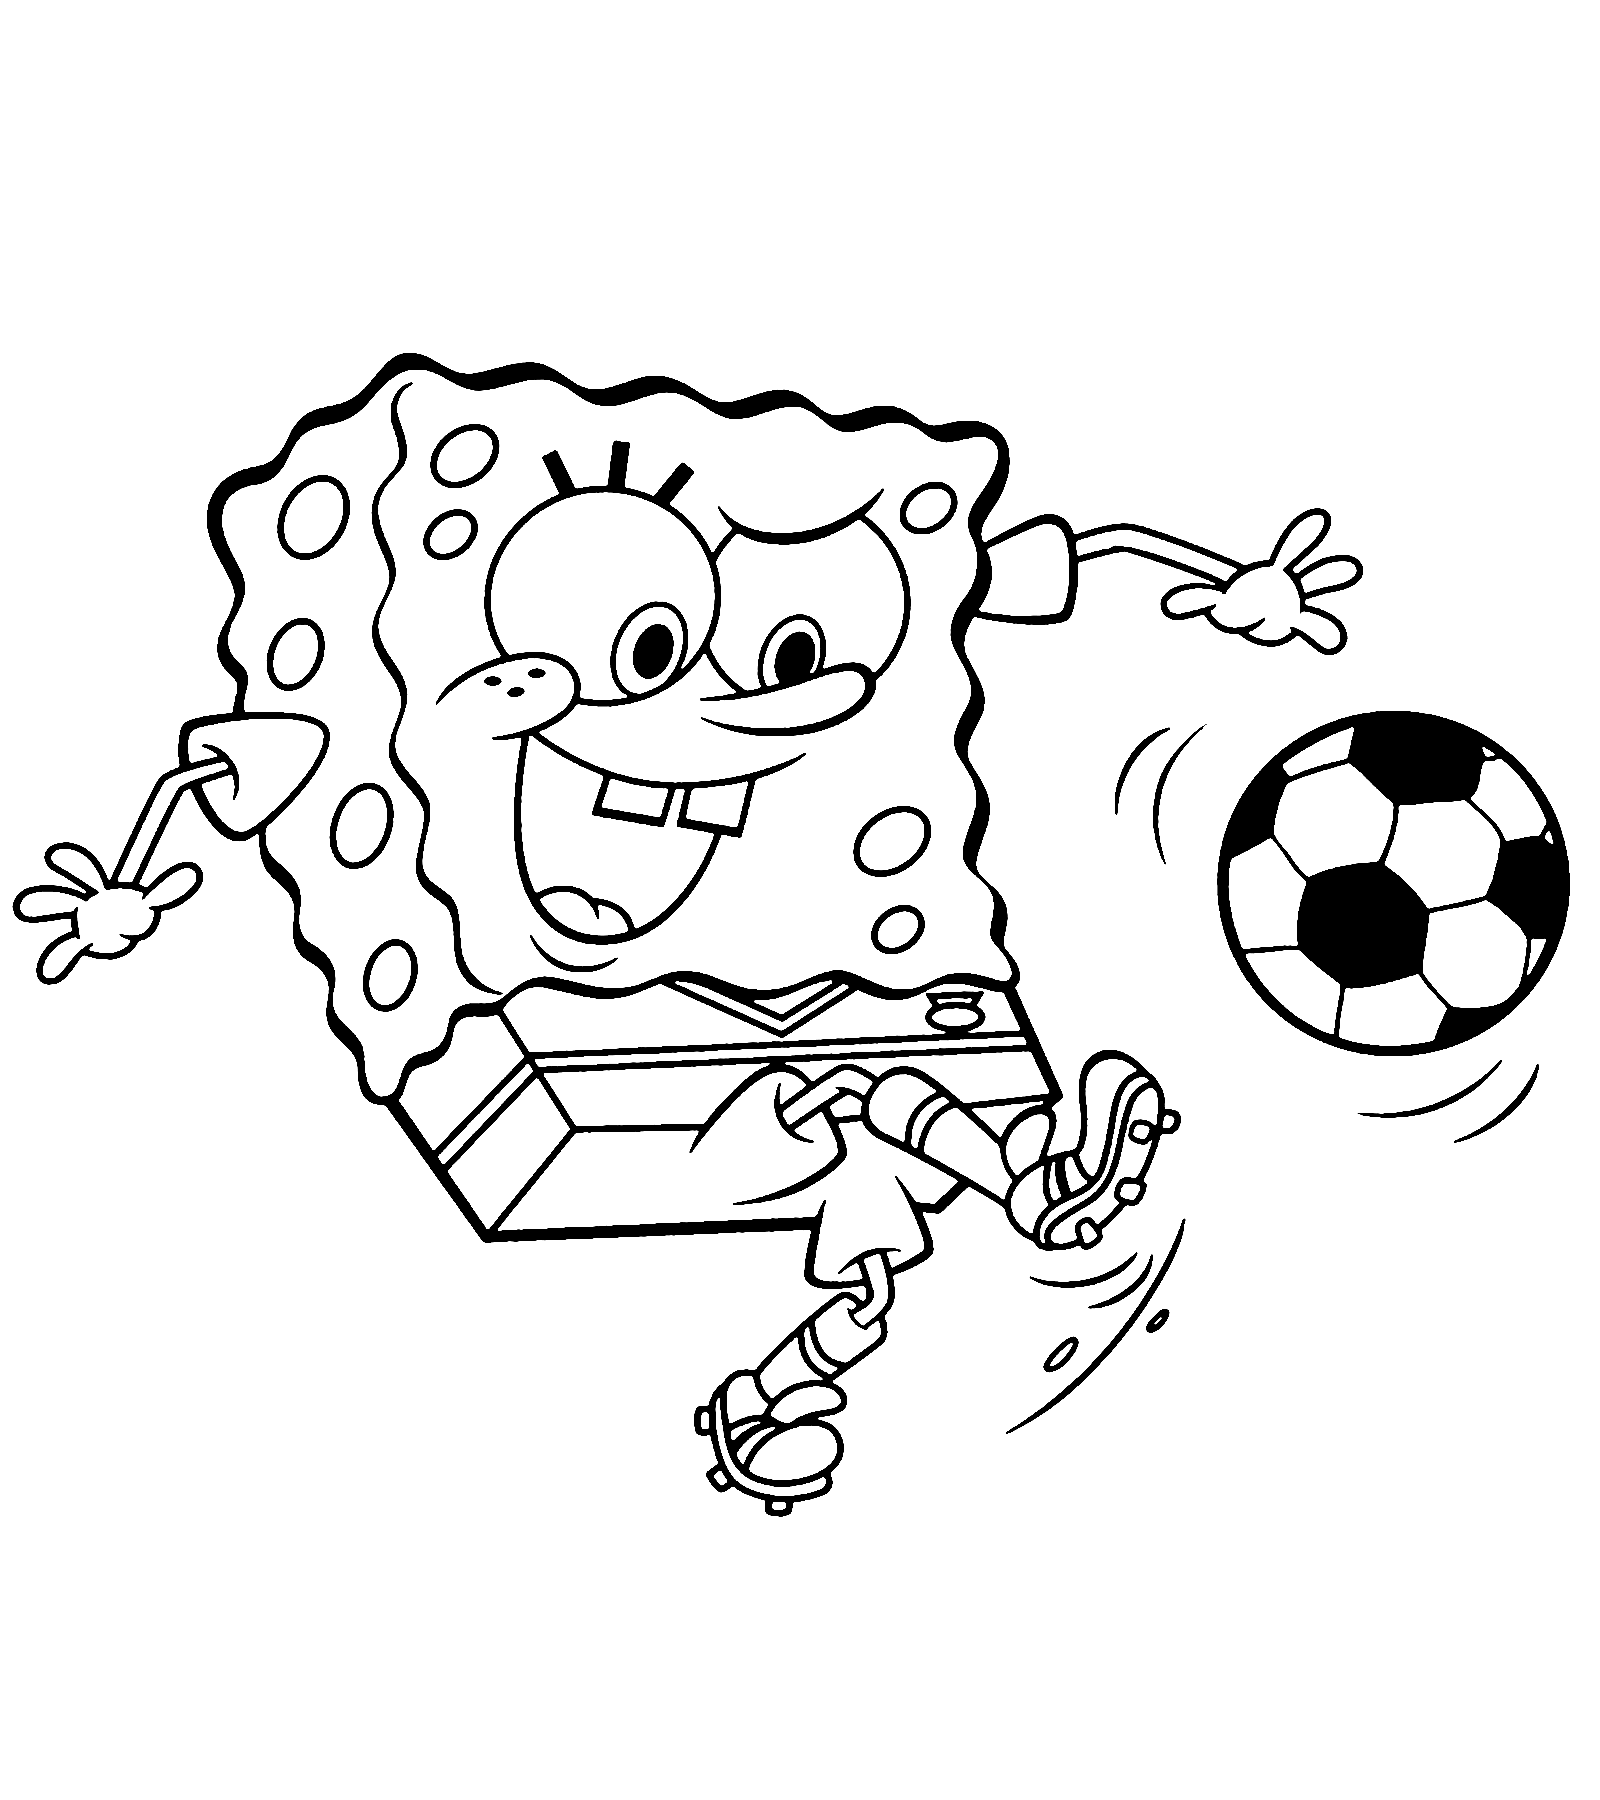 Printable soccer coloring pages - Spongebob Kicking Football